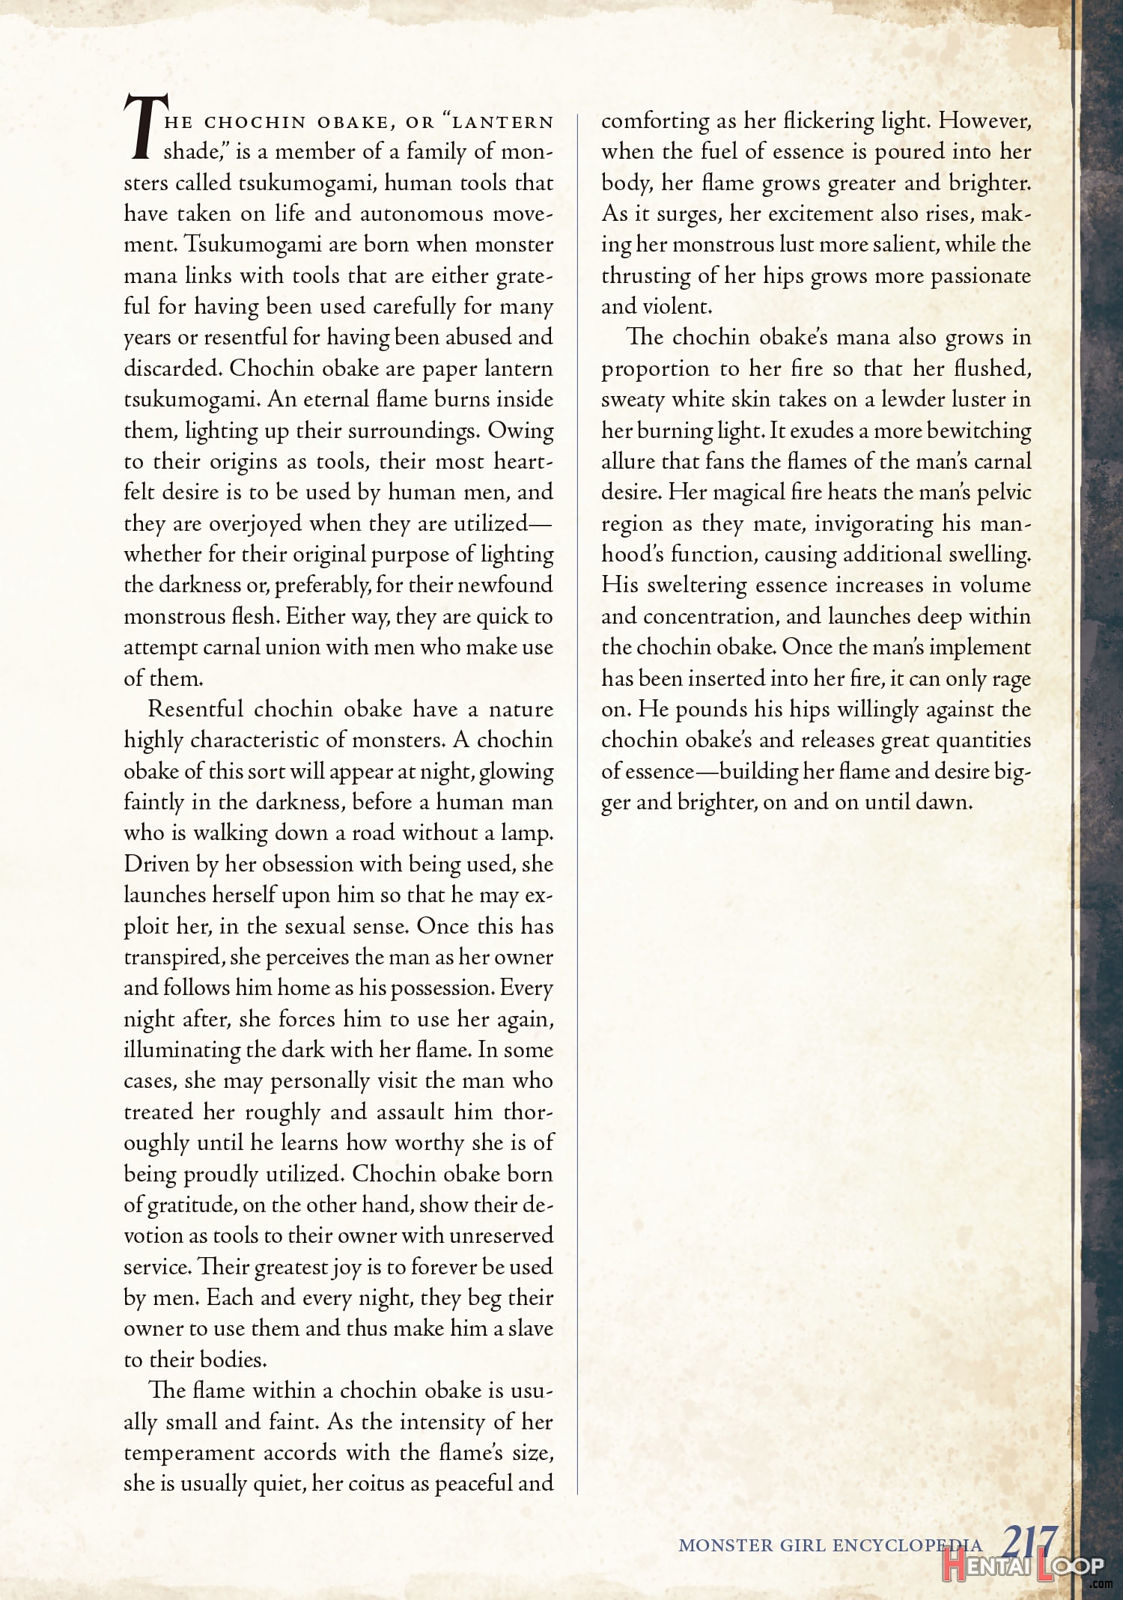 Monster Girl Encyclopedia Vol. 2 page 218